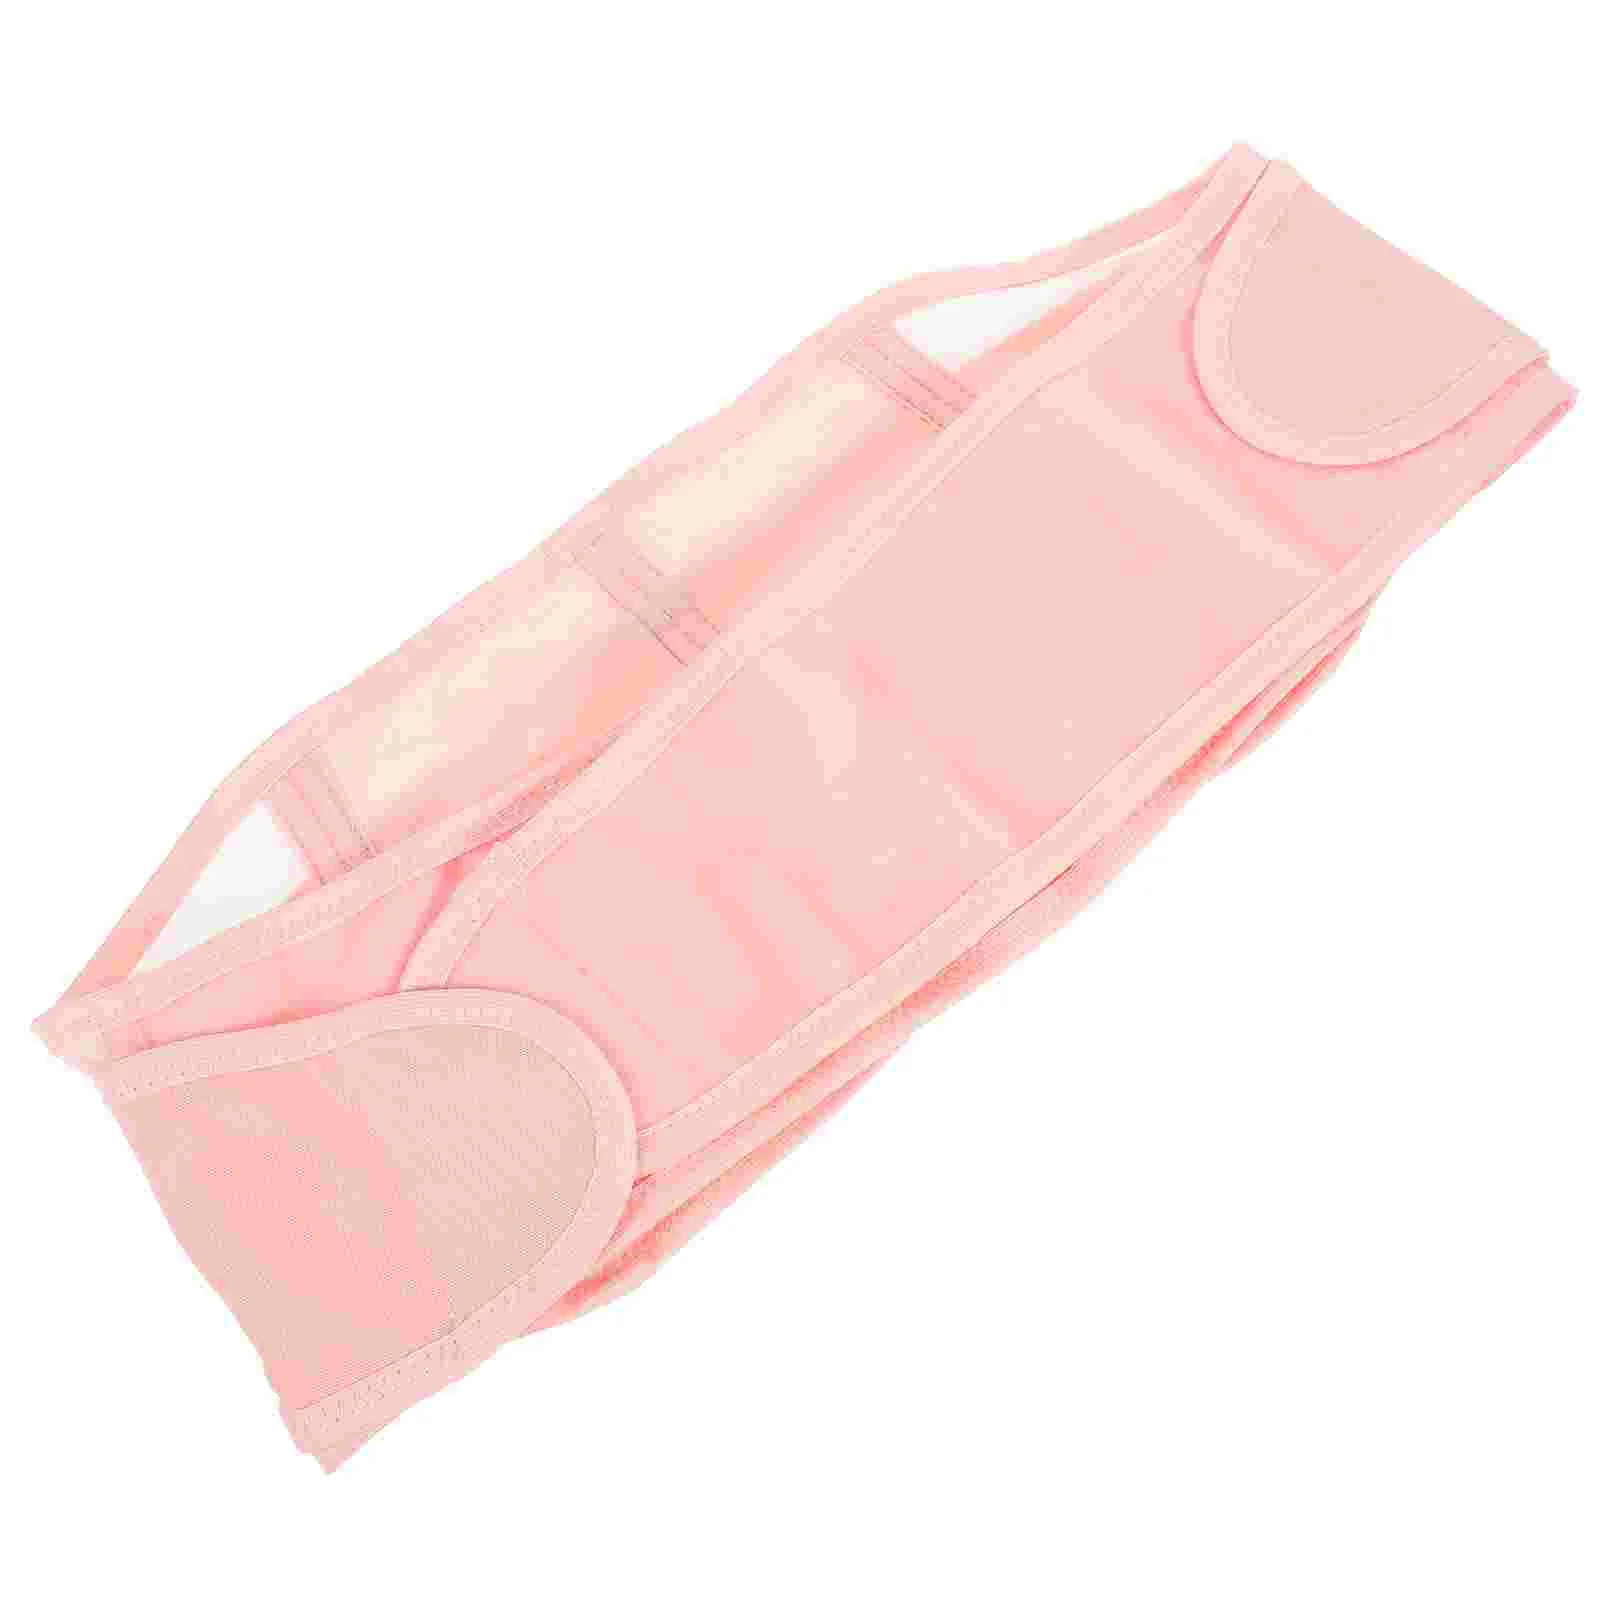 

Pregnancy Belt for Belly Support Pregnancy Pelvic Support Belt Maternity Abdomen Band (Pink)